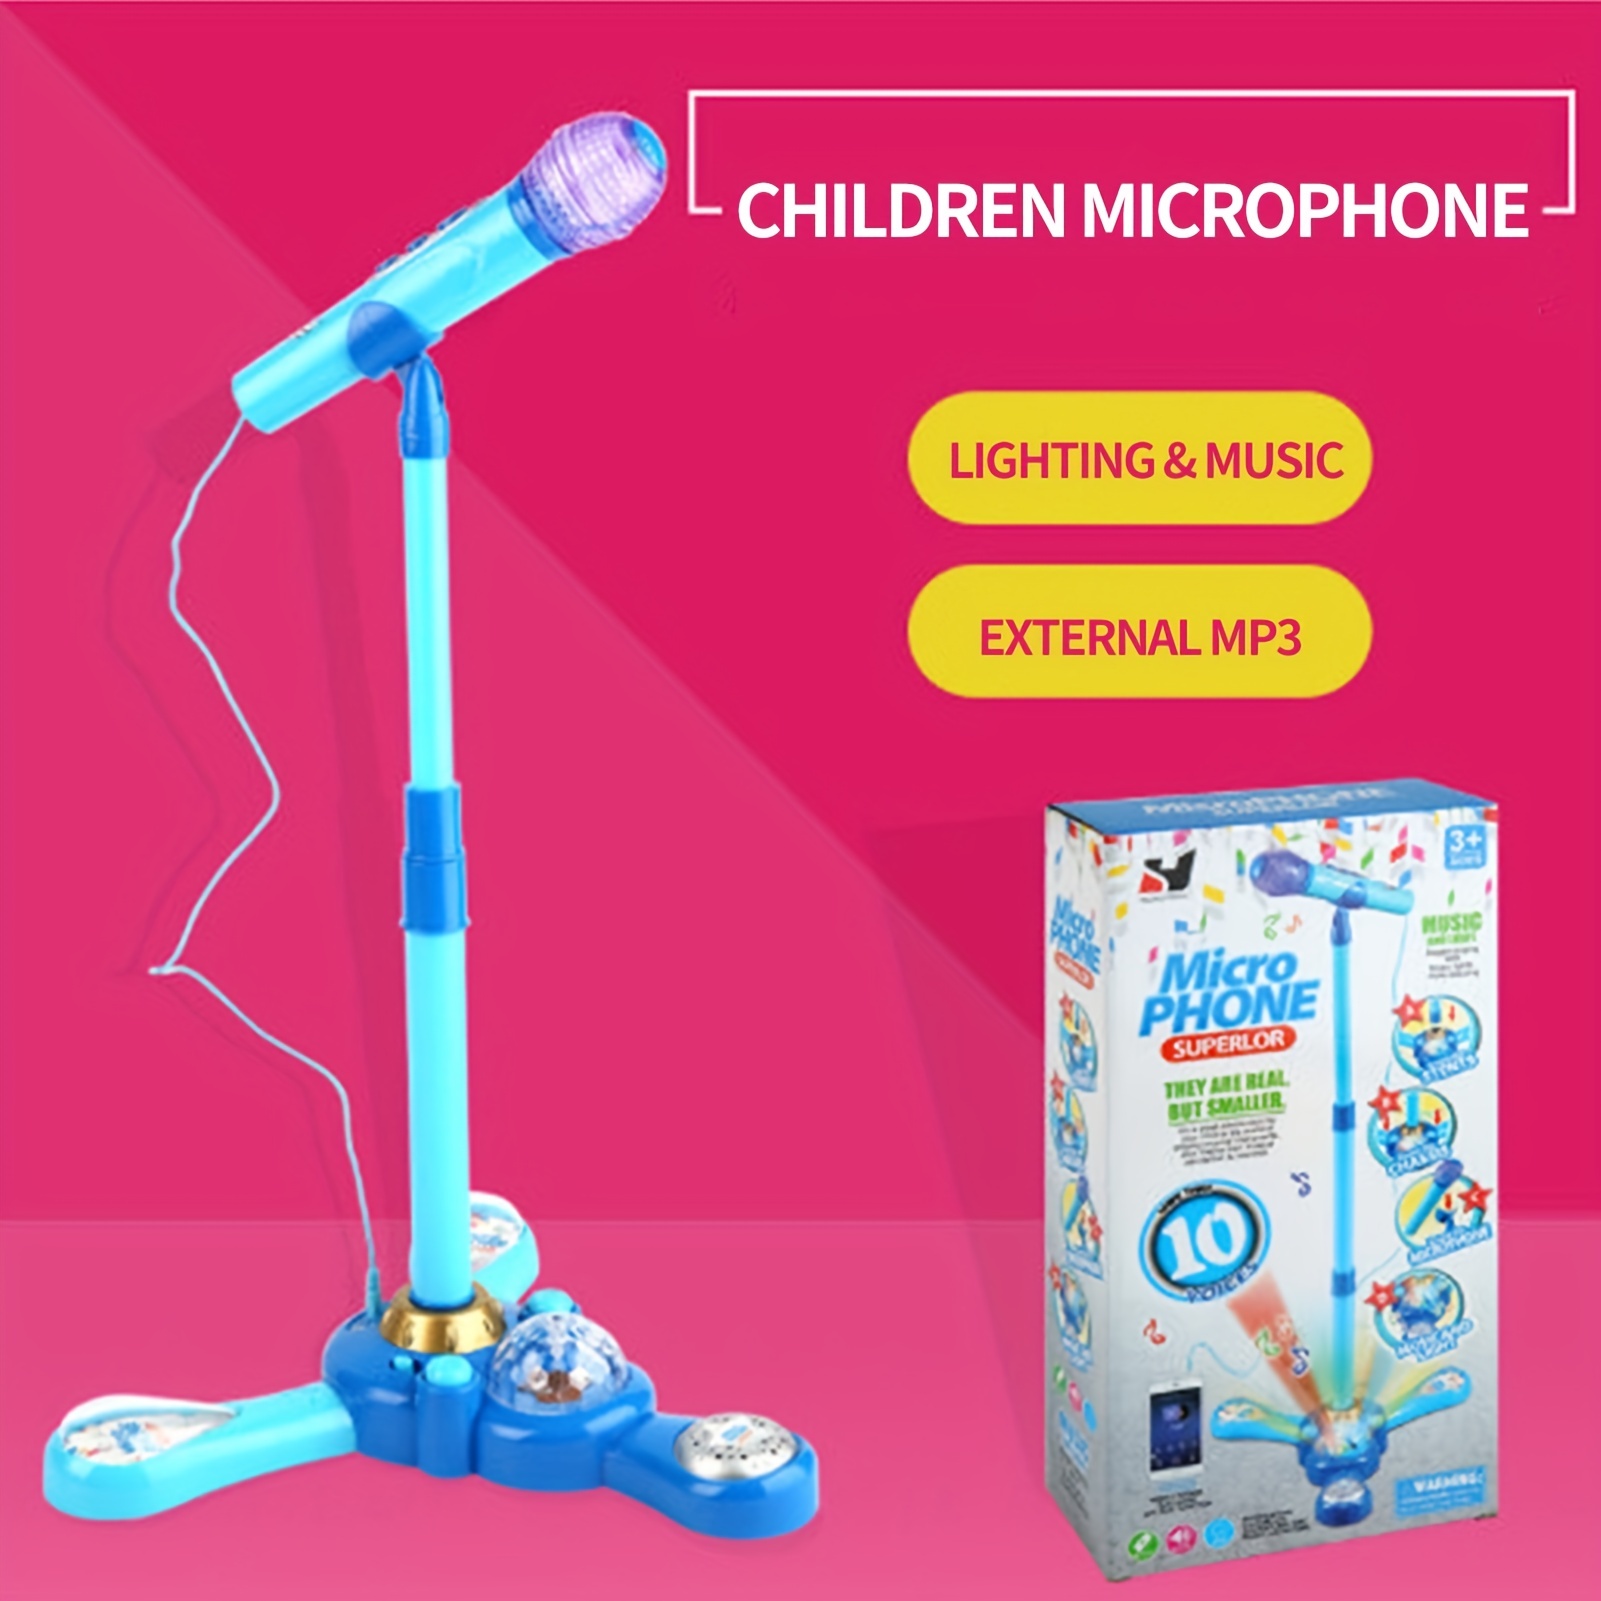  Karaoke Machine Microphone For Kids Toys,Toddler